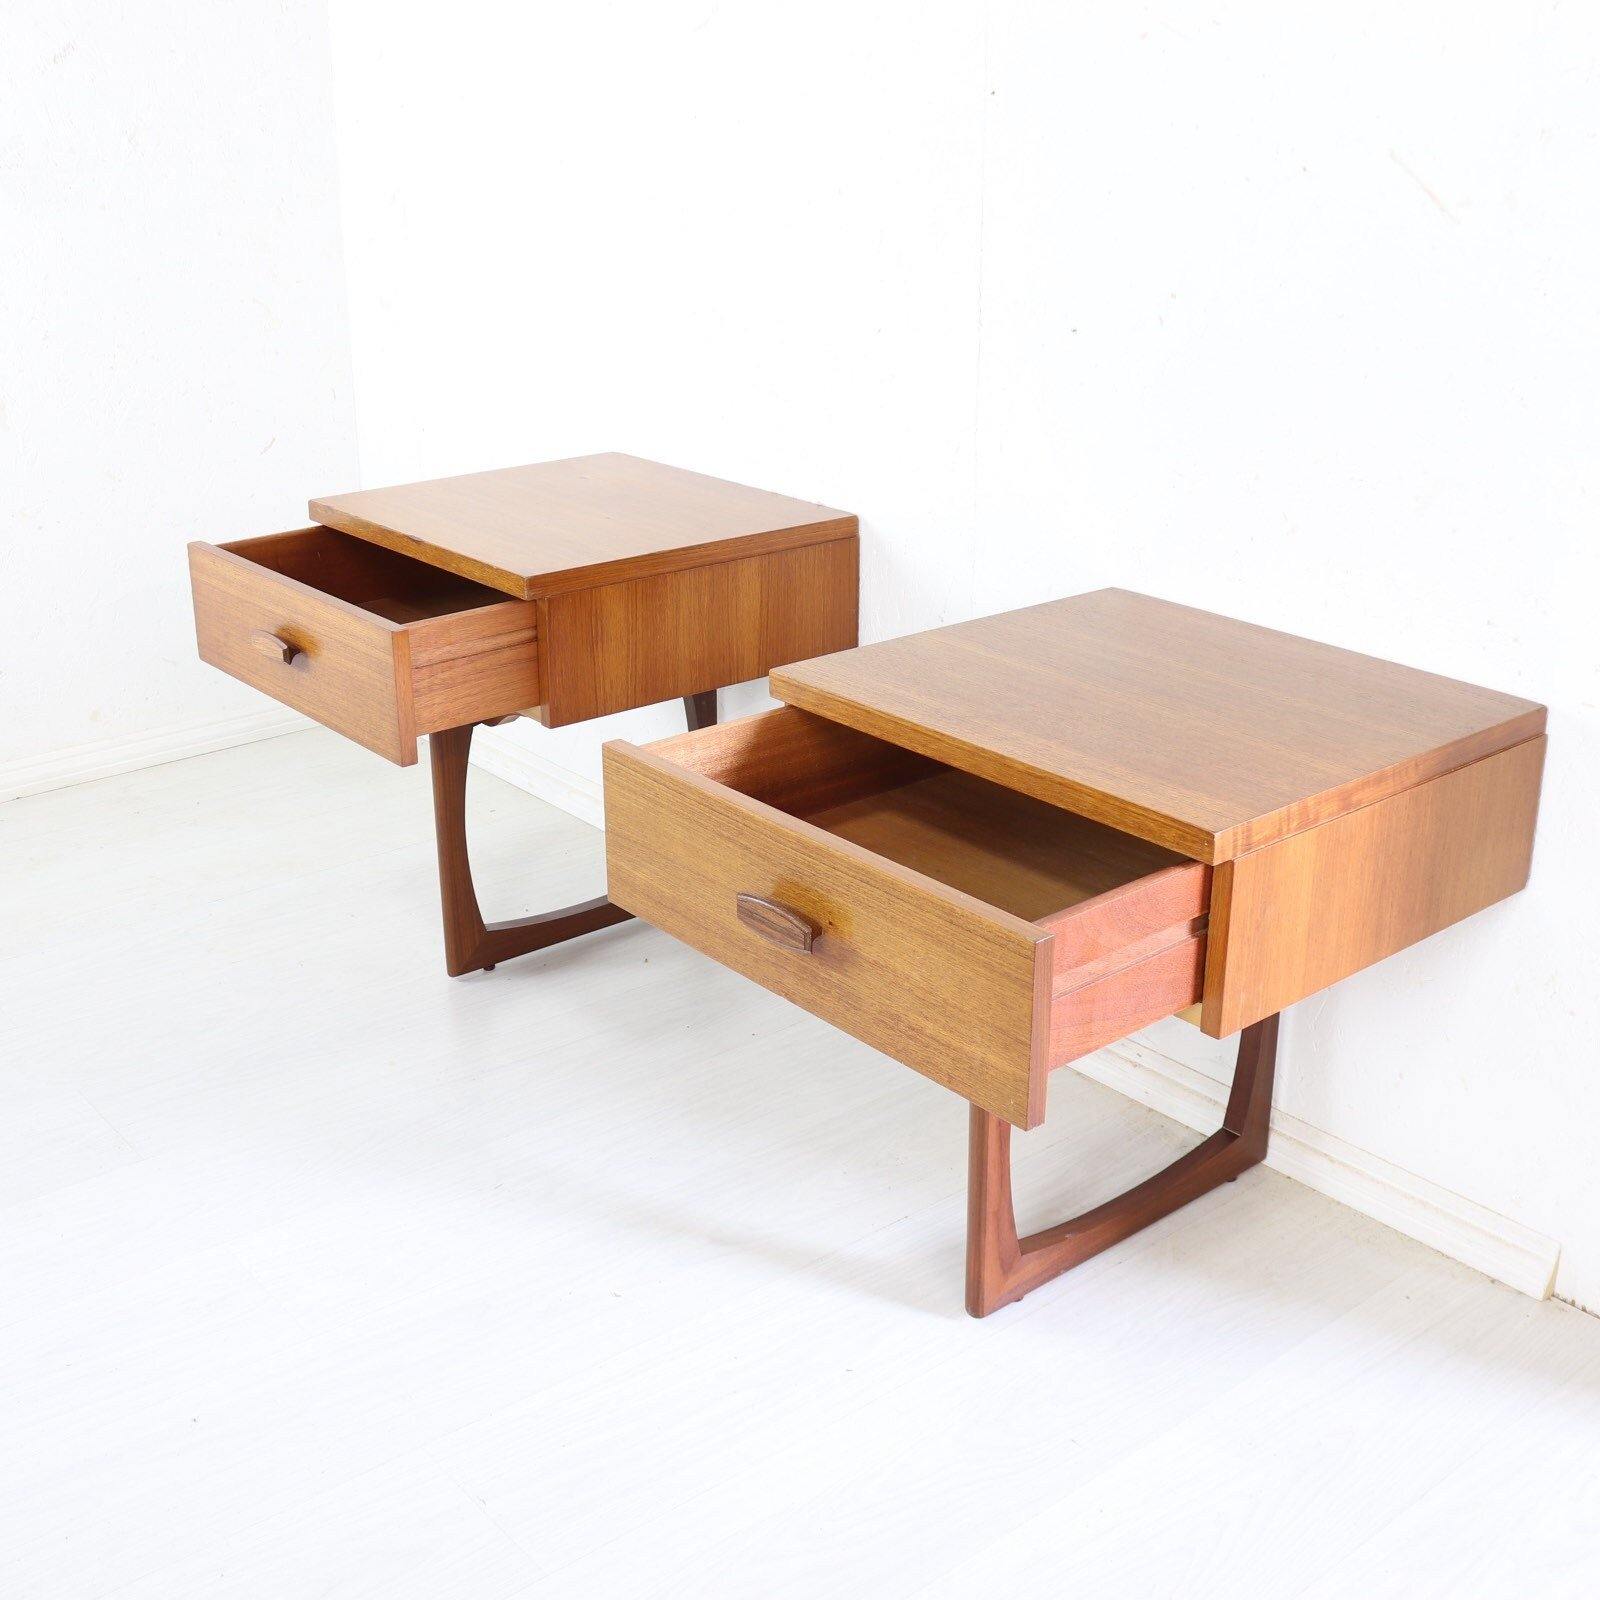 Bedside Tables By G plan Quadrille Range Floating Tables Pair - teakyfinders